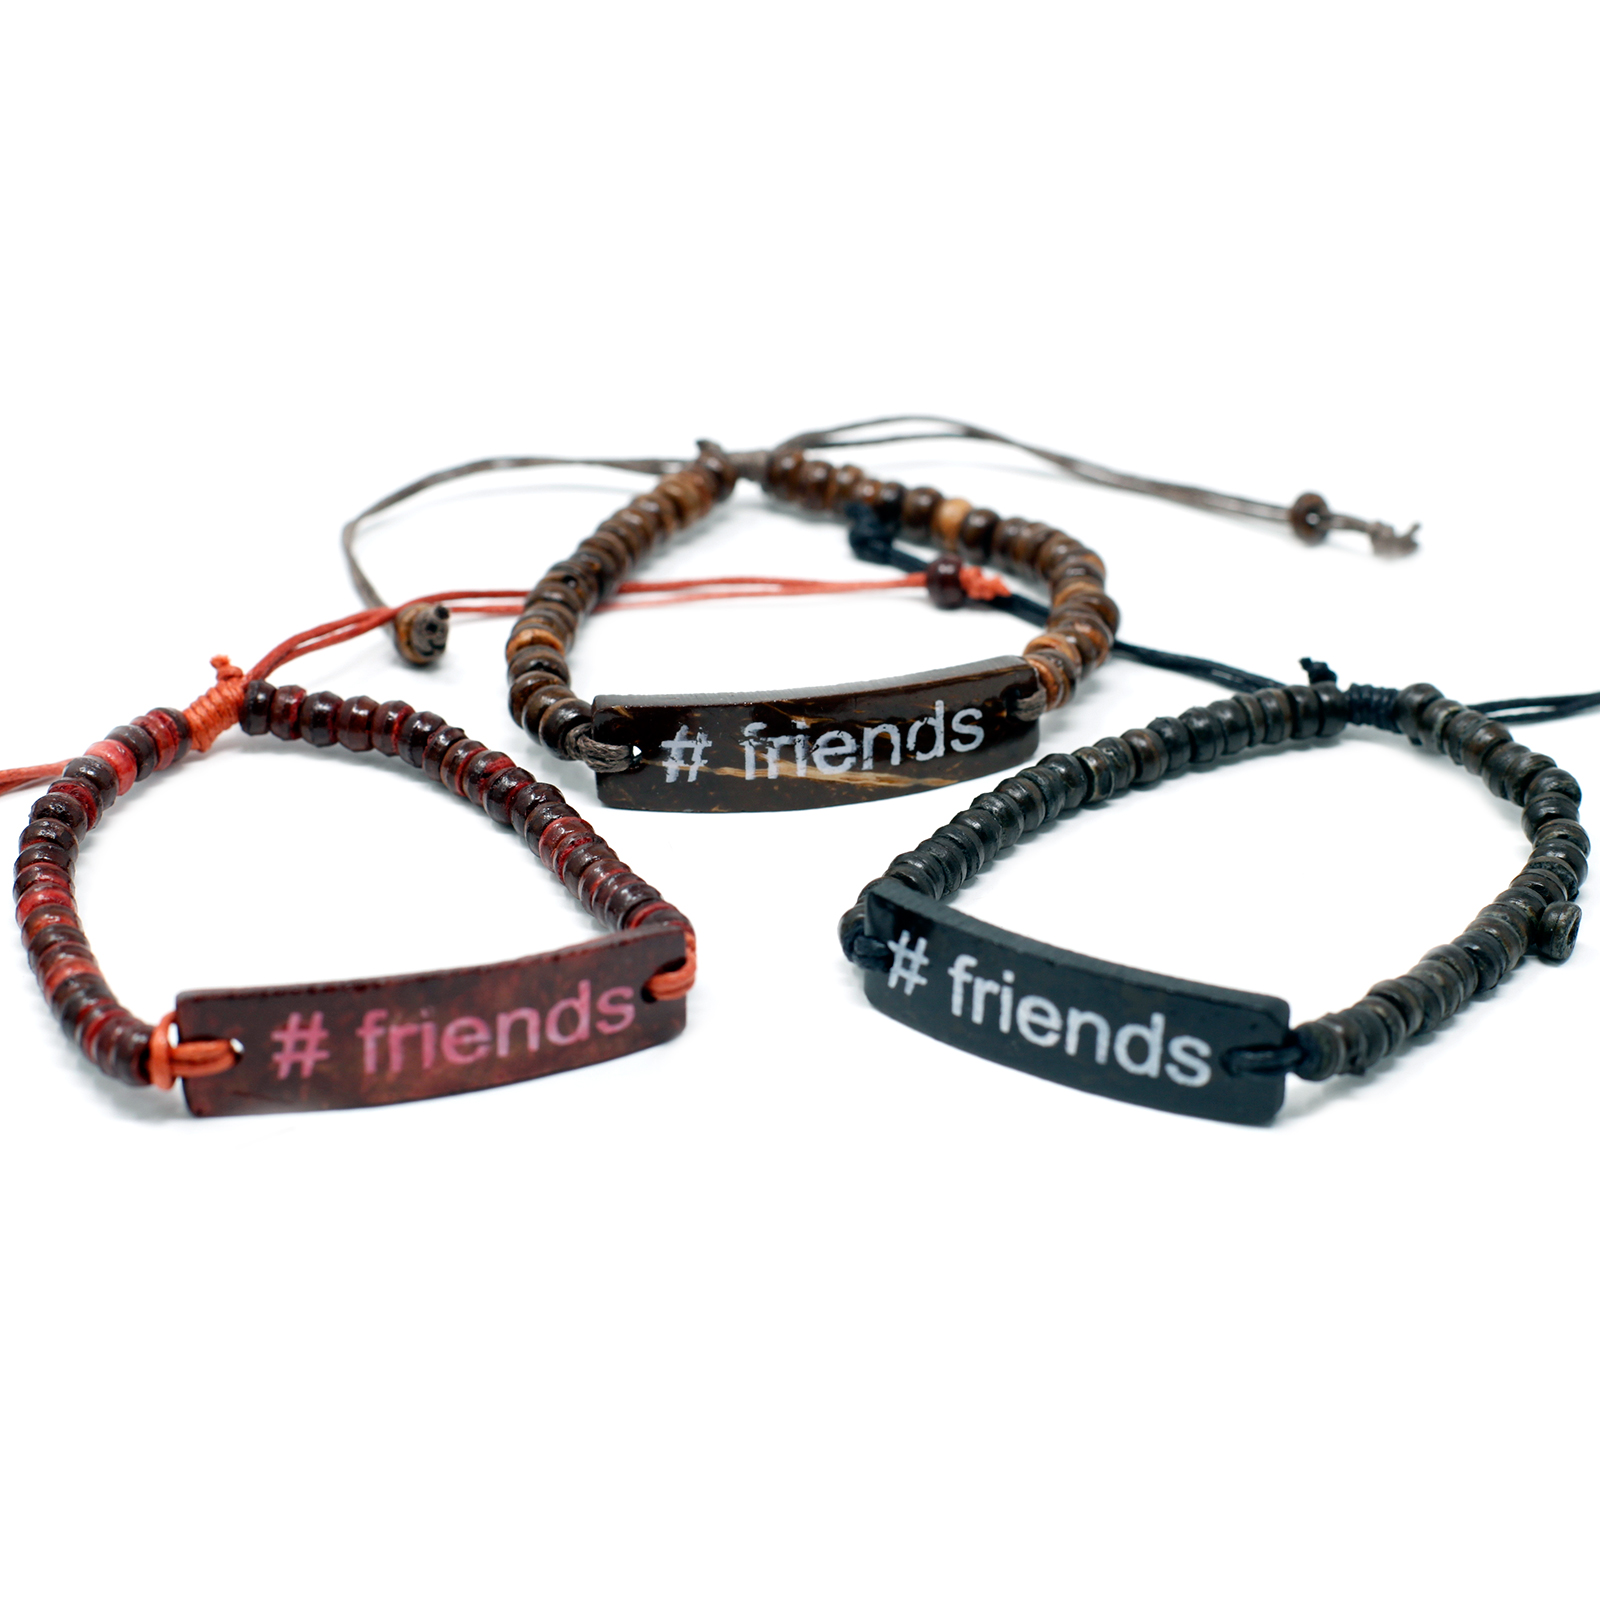 6 x Coco Slogan Bracelets - #Friends - Click Image to Close